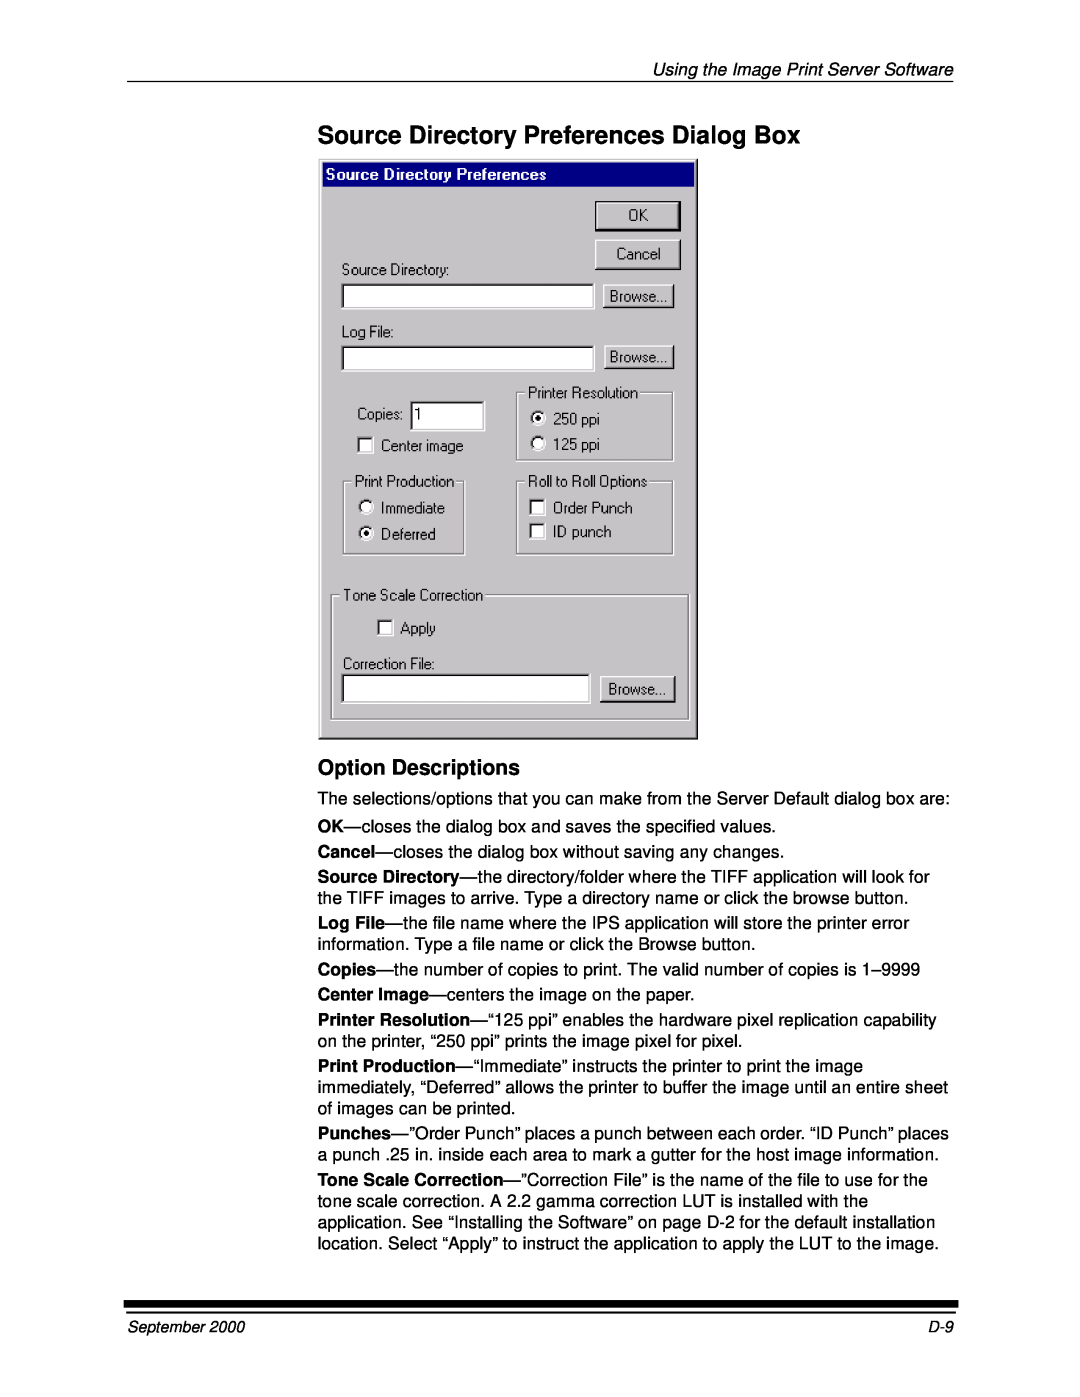 Kodak 20P manual Source Directory Preferences Dialog Box, Option Descriptions, Using the Image Print Server Software 